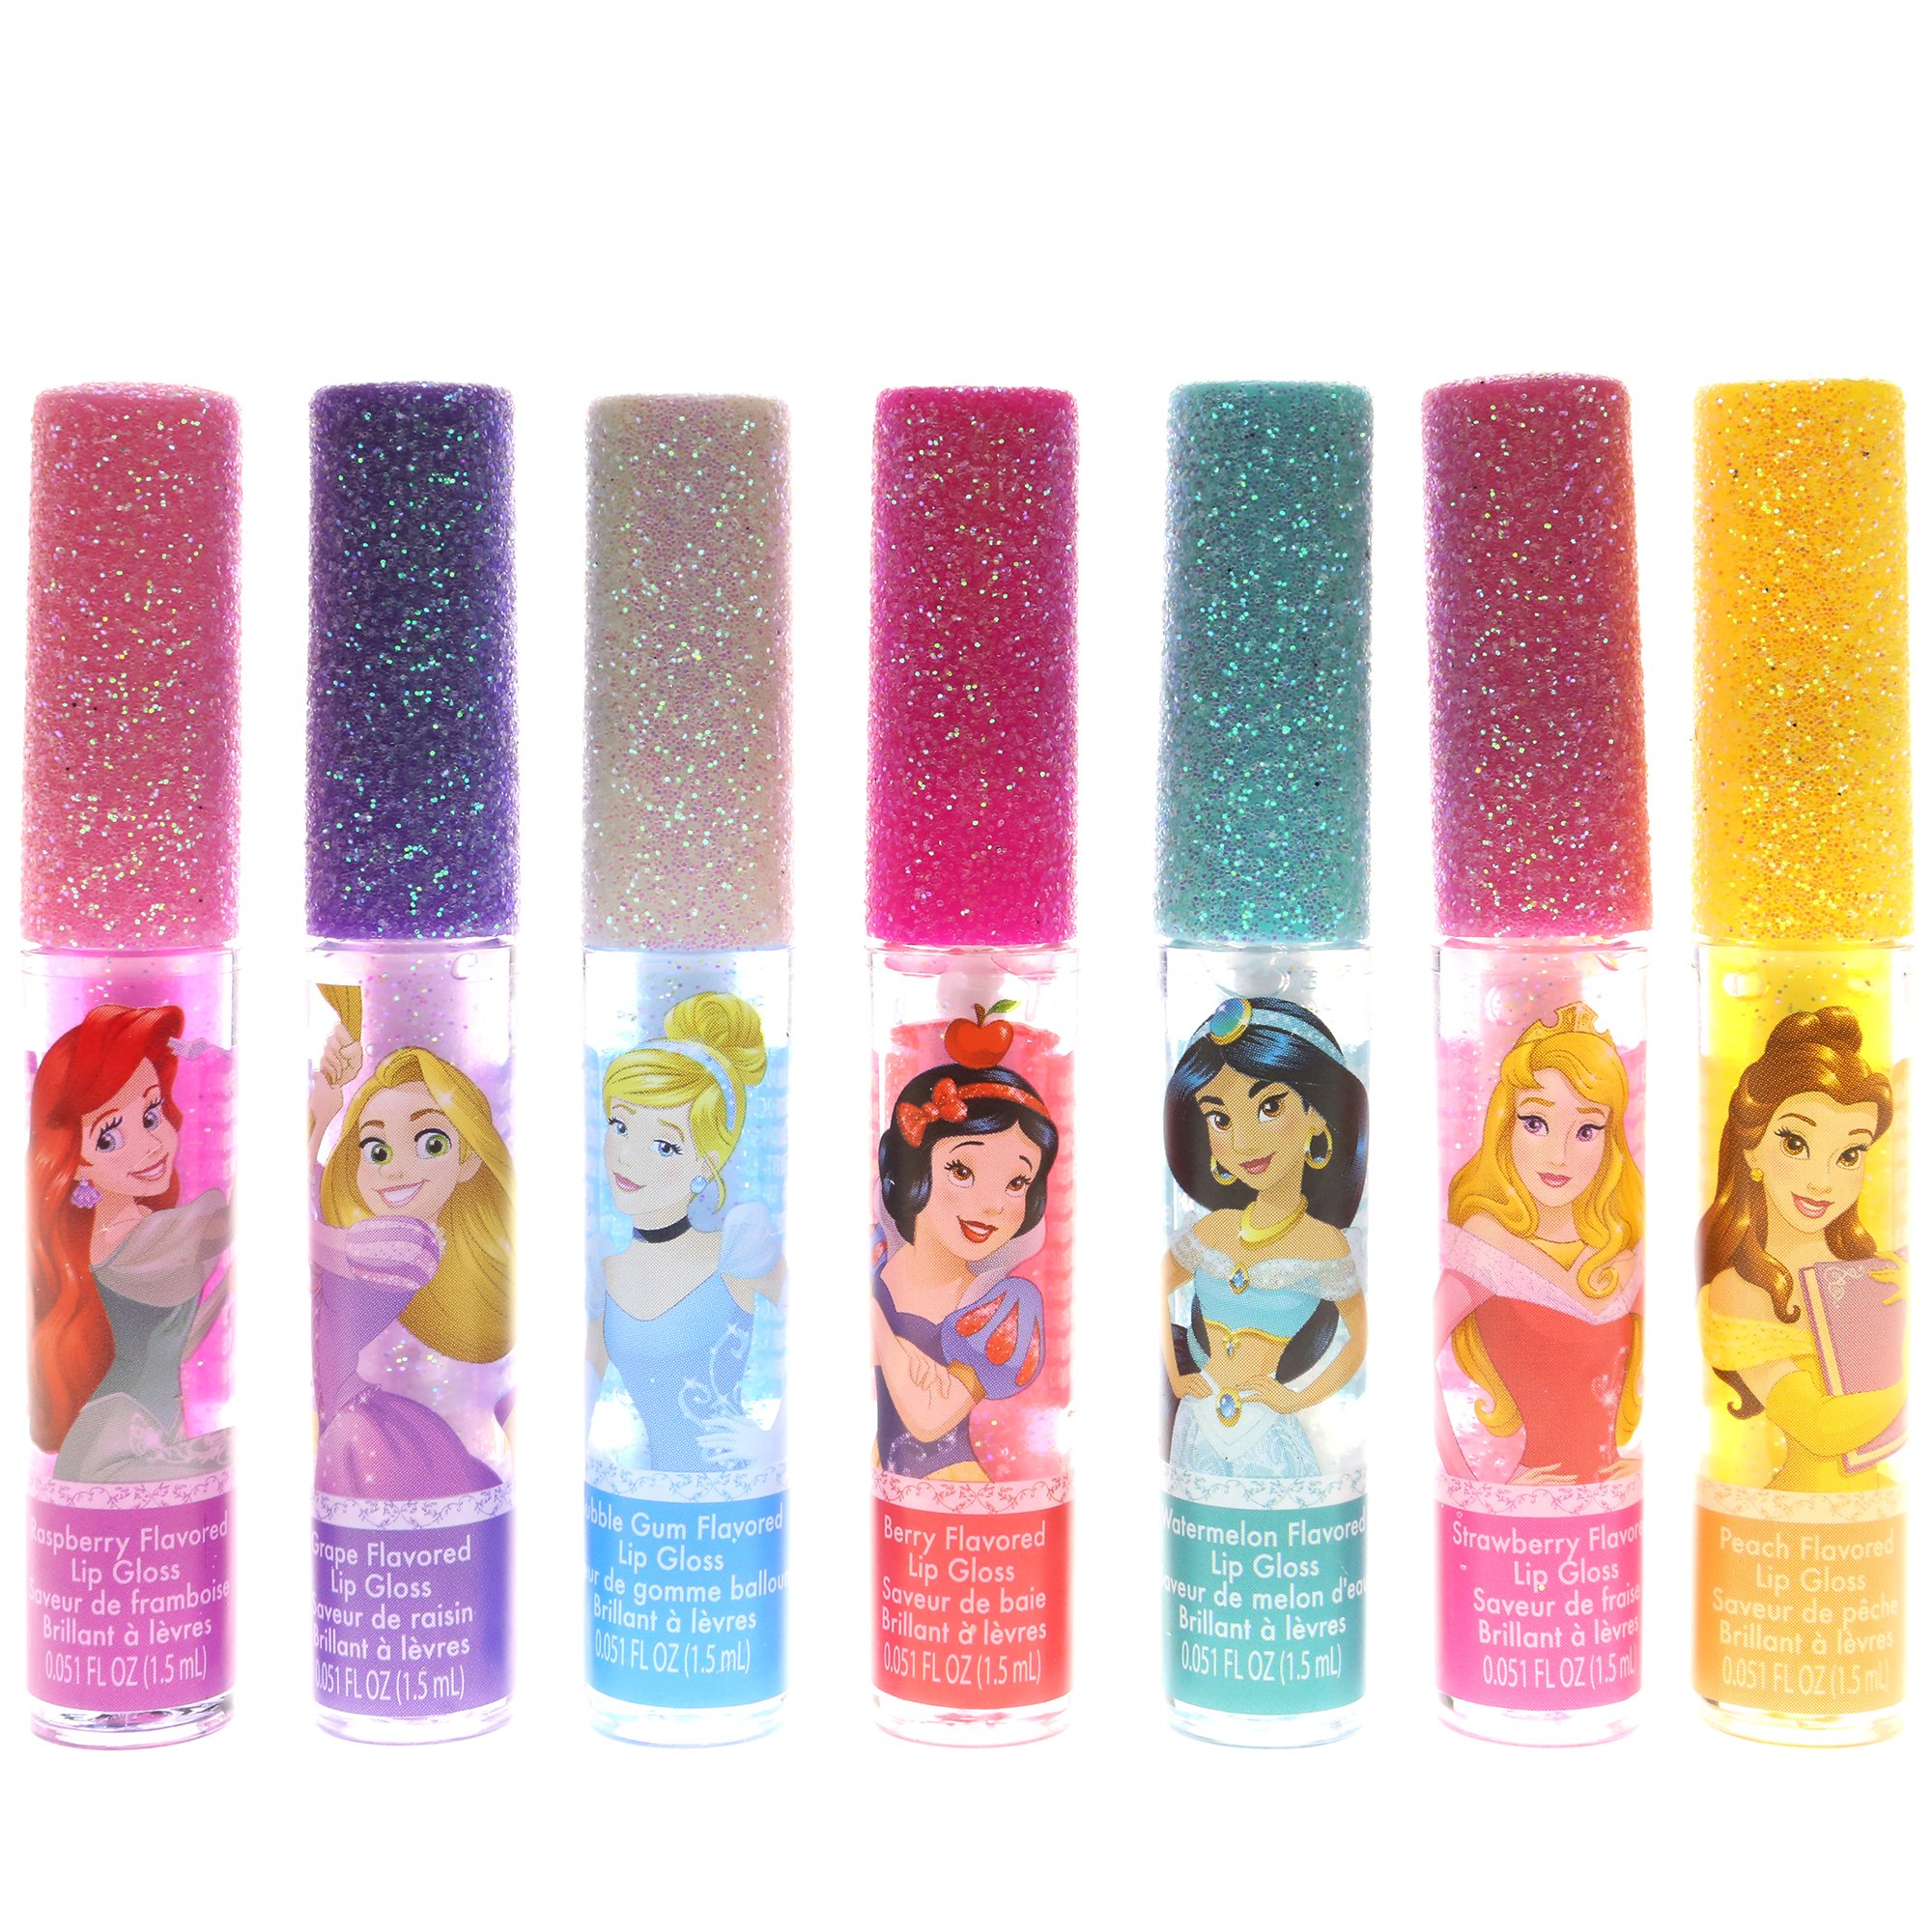 Townley Girl Disney Princess Super Sparkly Lip Gloss Set, 0.05 Fl Oz (Pack of 7)